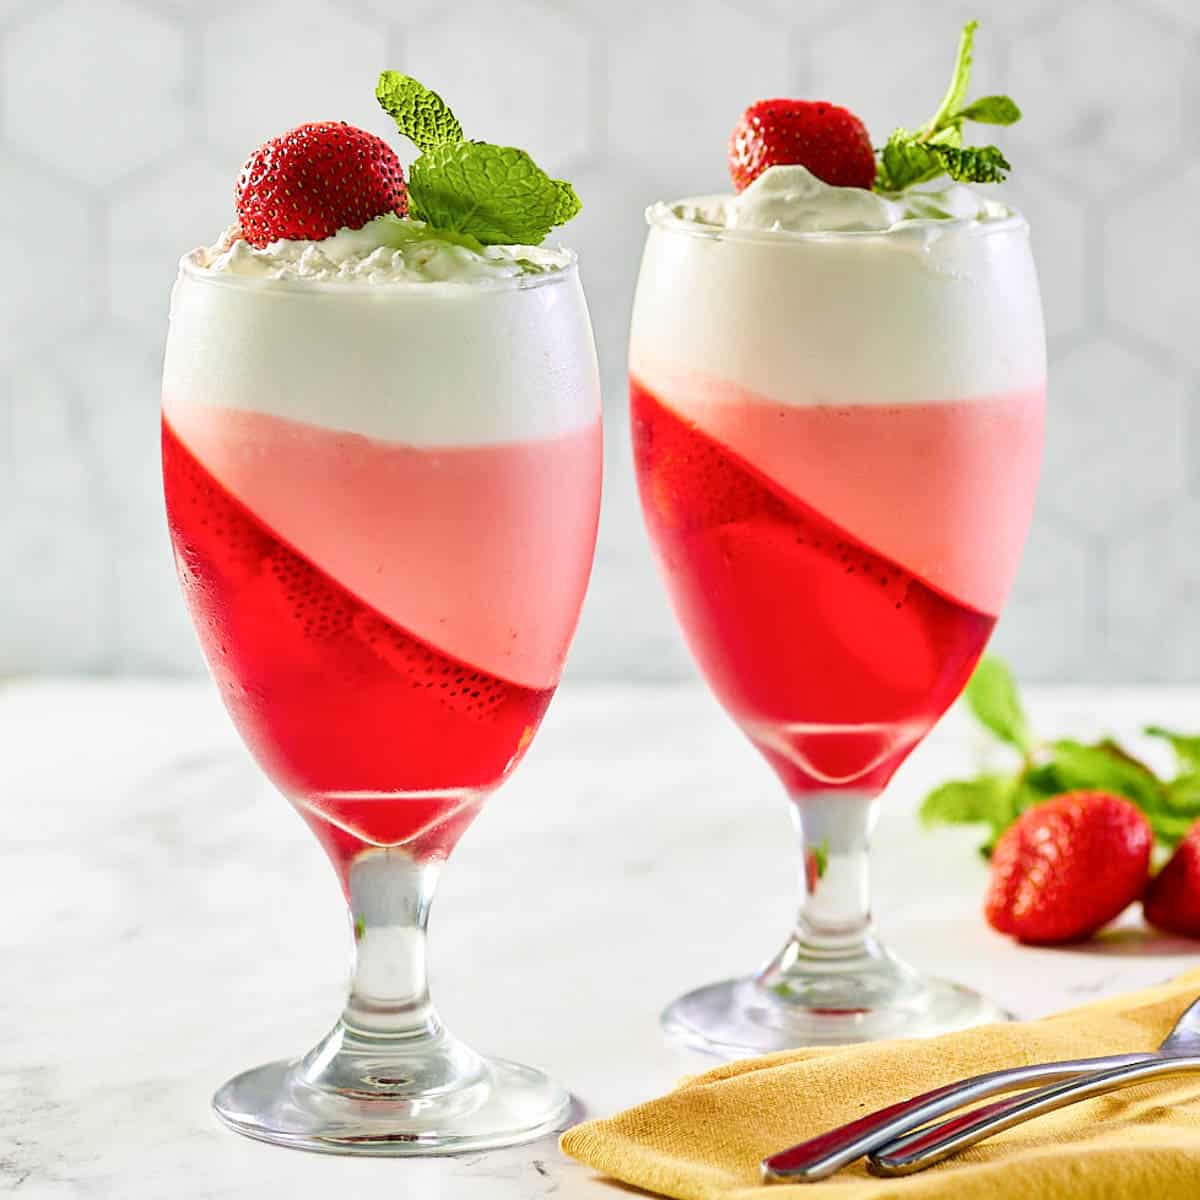 Strawberry jello parfait in two glasses.